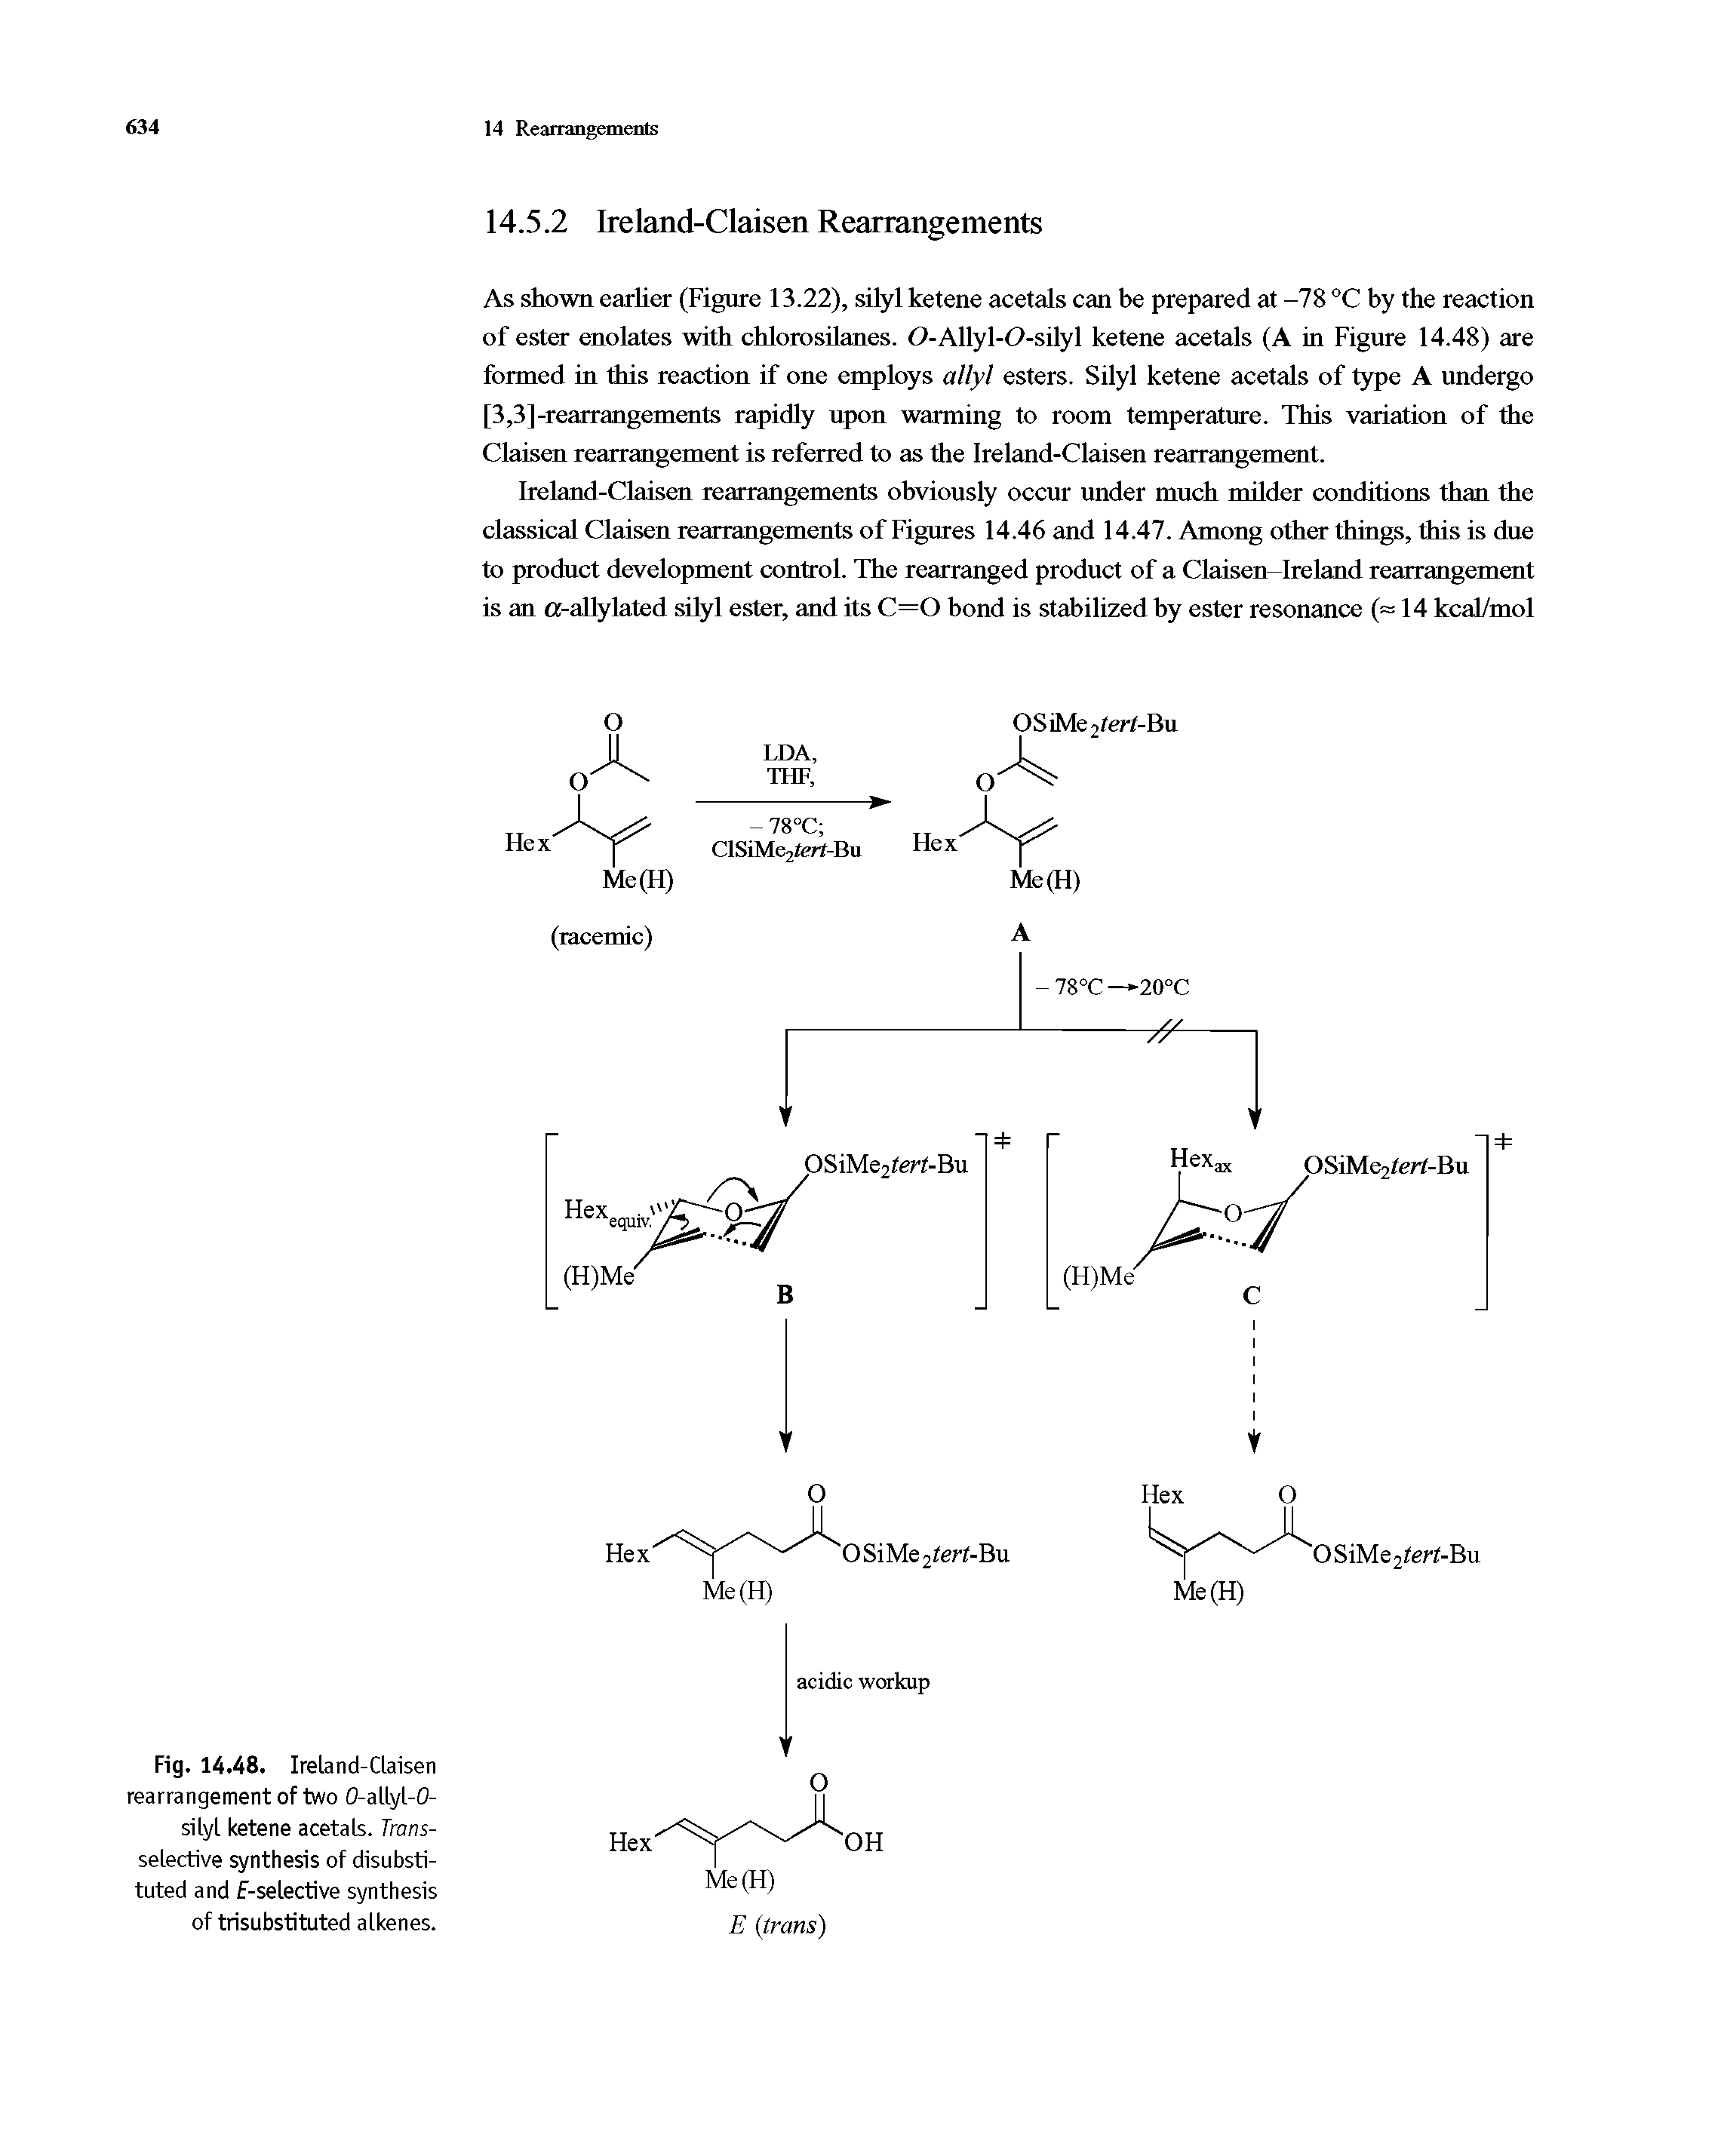 Fig. 14.48. Ireland-CLaisen rearrangement of two 0-allyl-0-sityl ketene acetals. Trans-selective synthesis of disubsti-tuted and F-selective synthesis of trisubstituted alkenes.